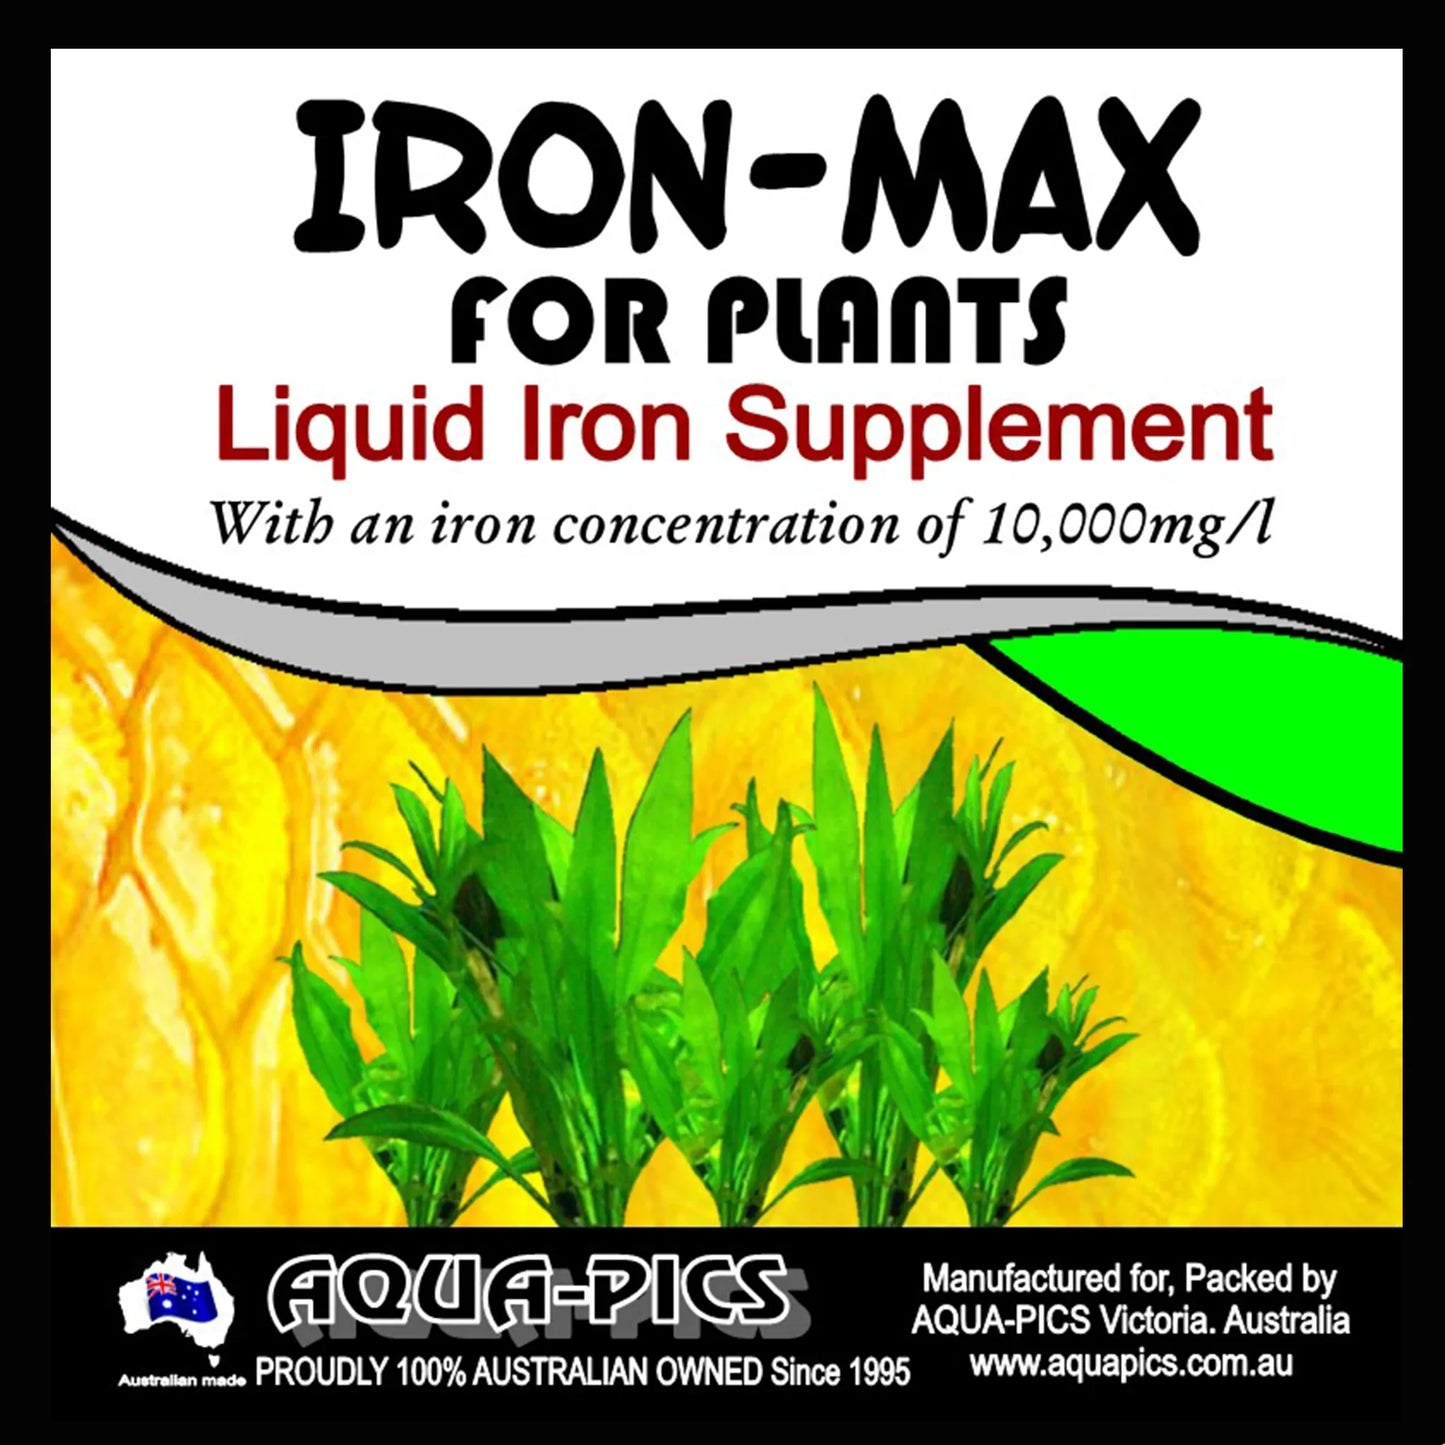 Iron-Max Professional grade liquid iron supplement 5 litre